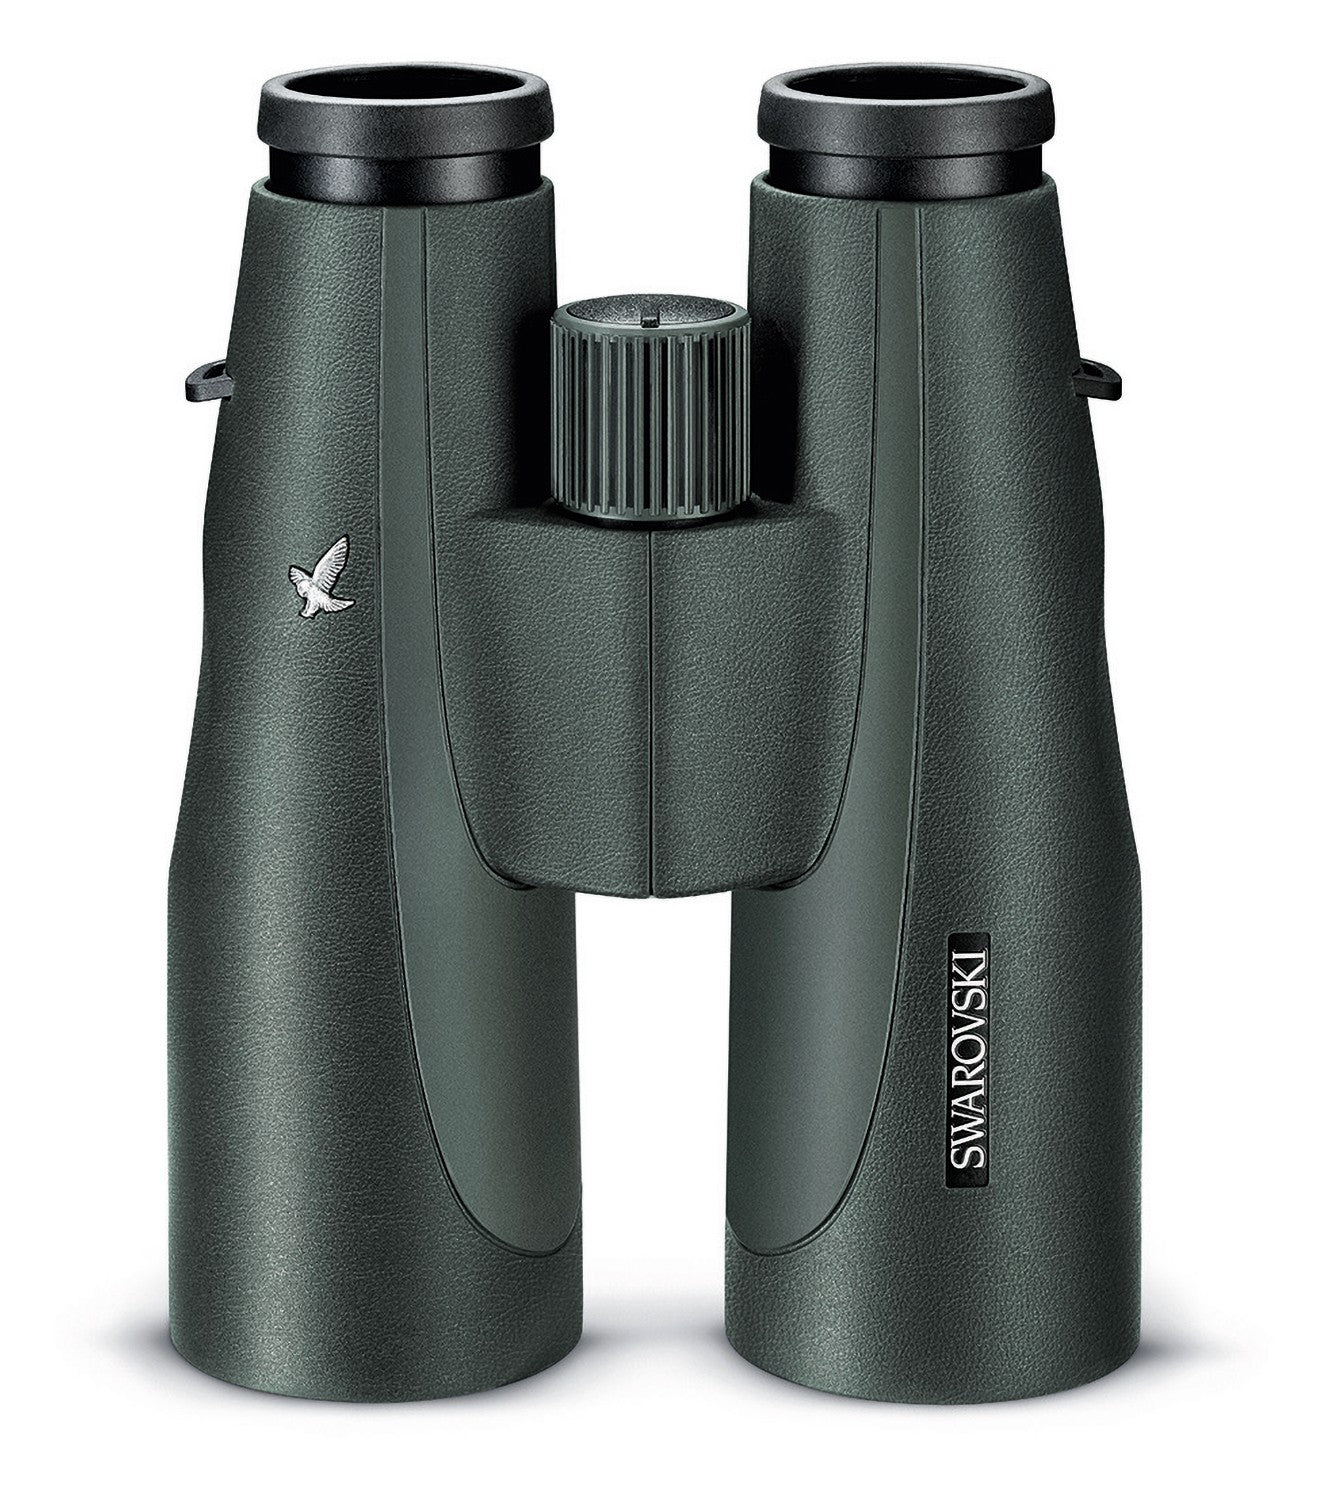 SLC 8x56 Premium Binoculars - Product Photo 1 - Close up, top down view of the binoculars